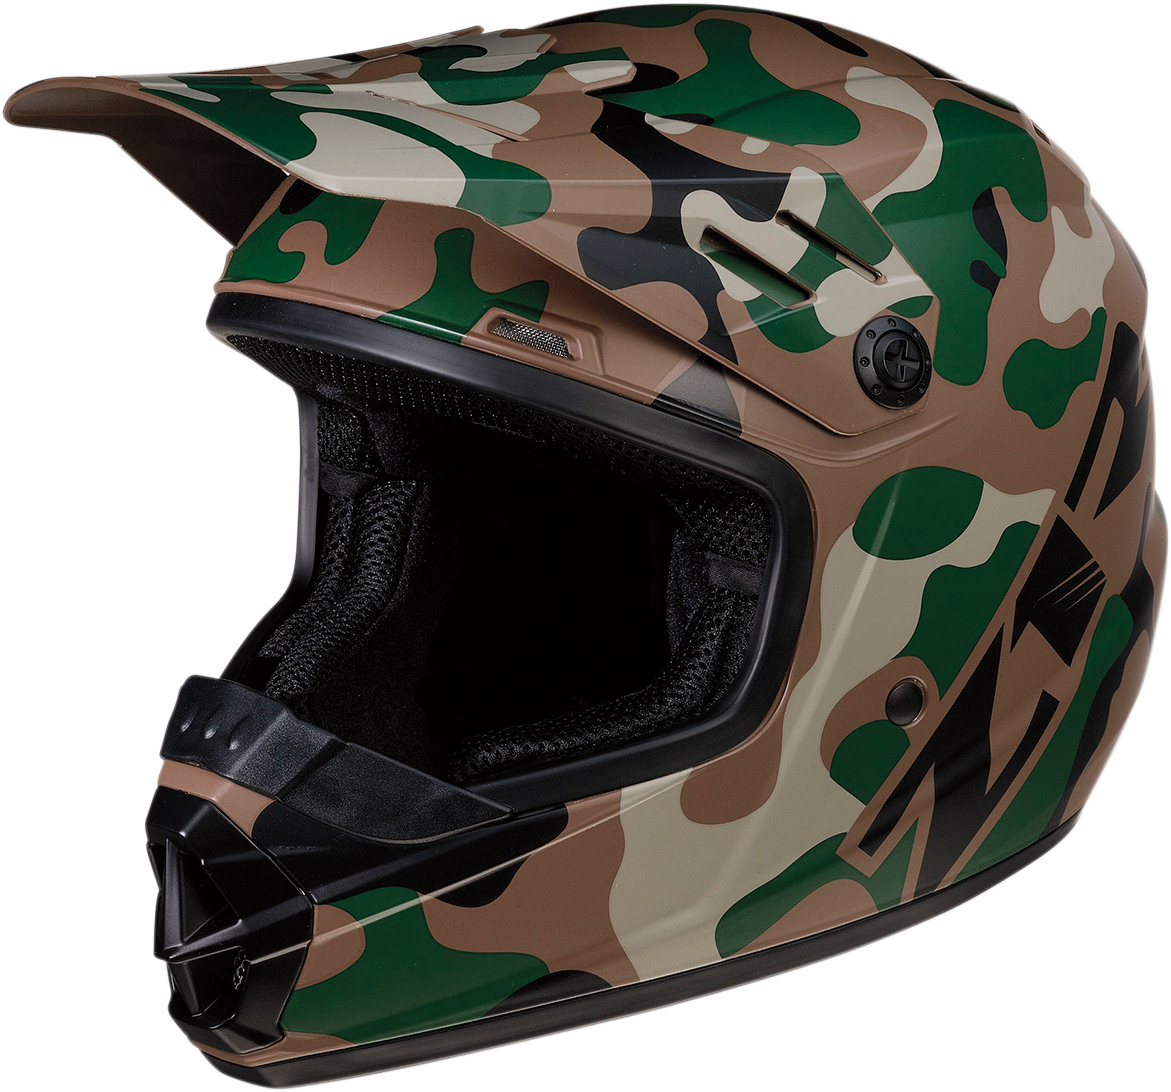 Z1R Youth Rise Helmet - Camo - Woodland - Small 0111-1258